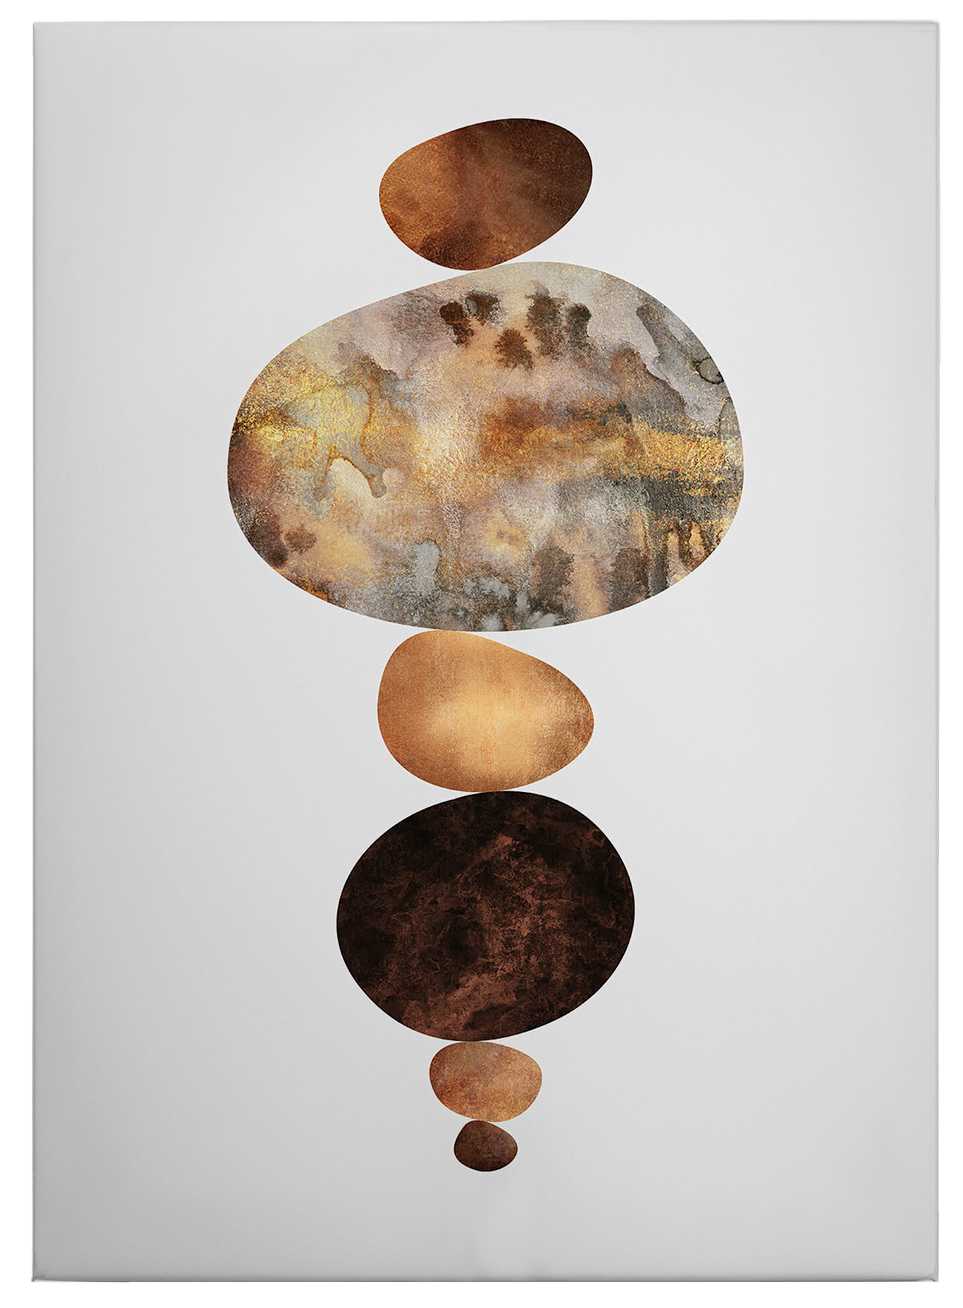             Cuadro en lienzo "Equilibrio" de Fredriksson - 0,50 m x 0,70 m
        